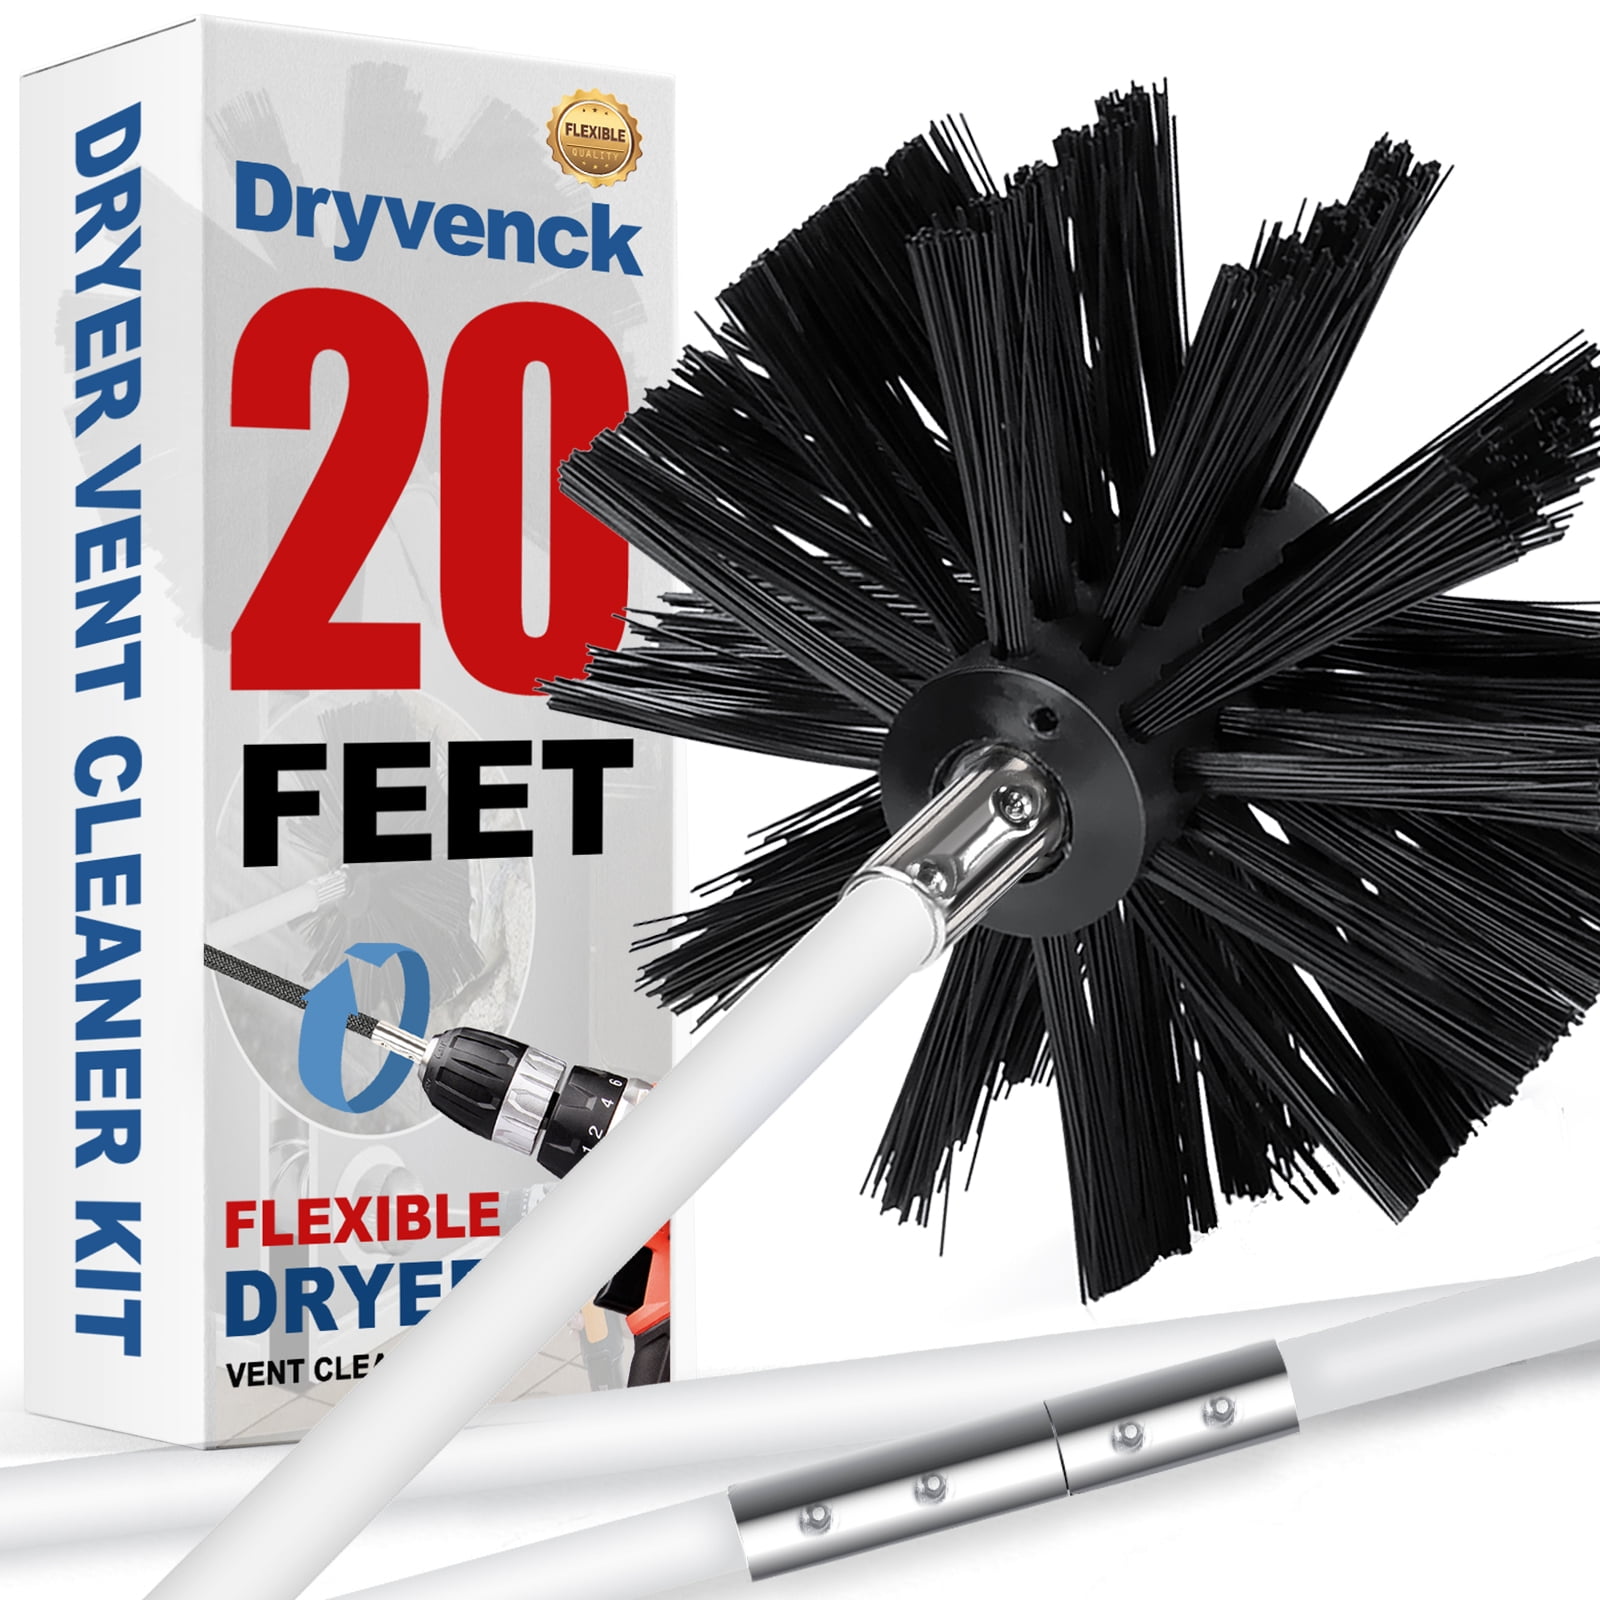 7 Pieces 25 Feet Dryer Vent Cleaner Kit, Reinforced Nylon Dryer